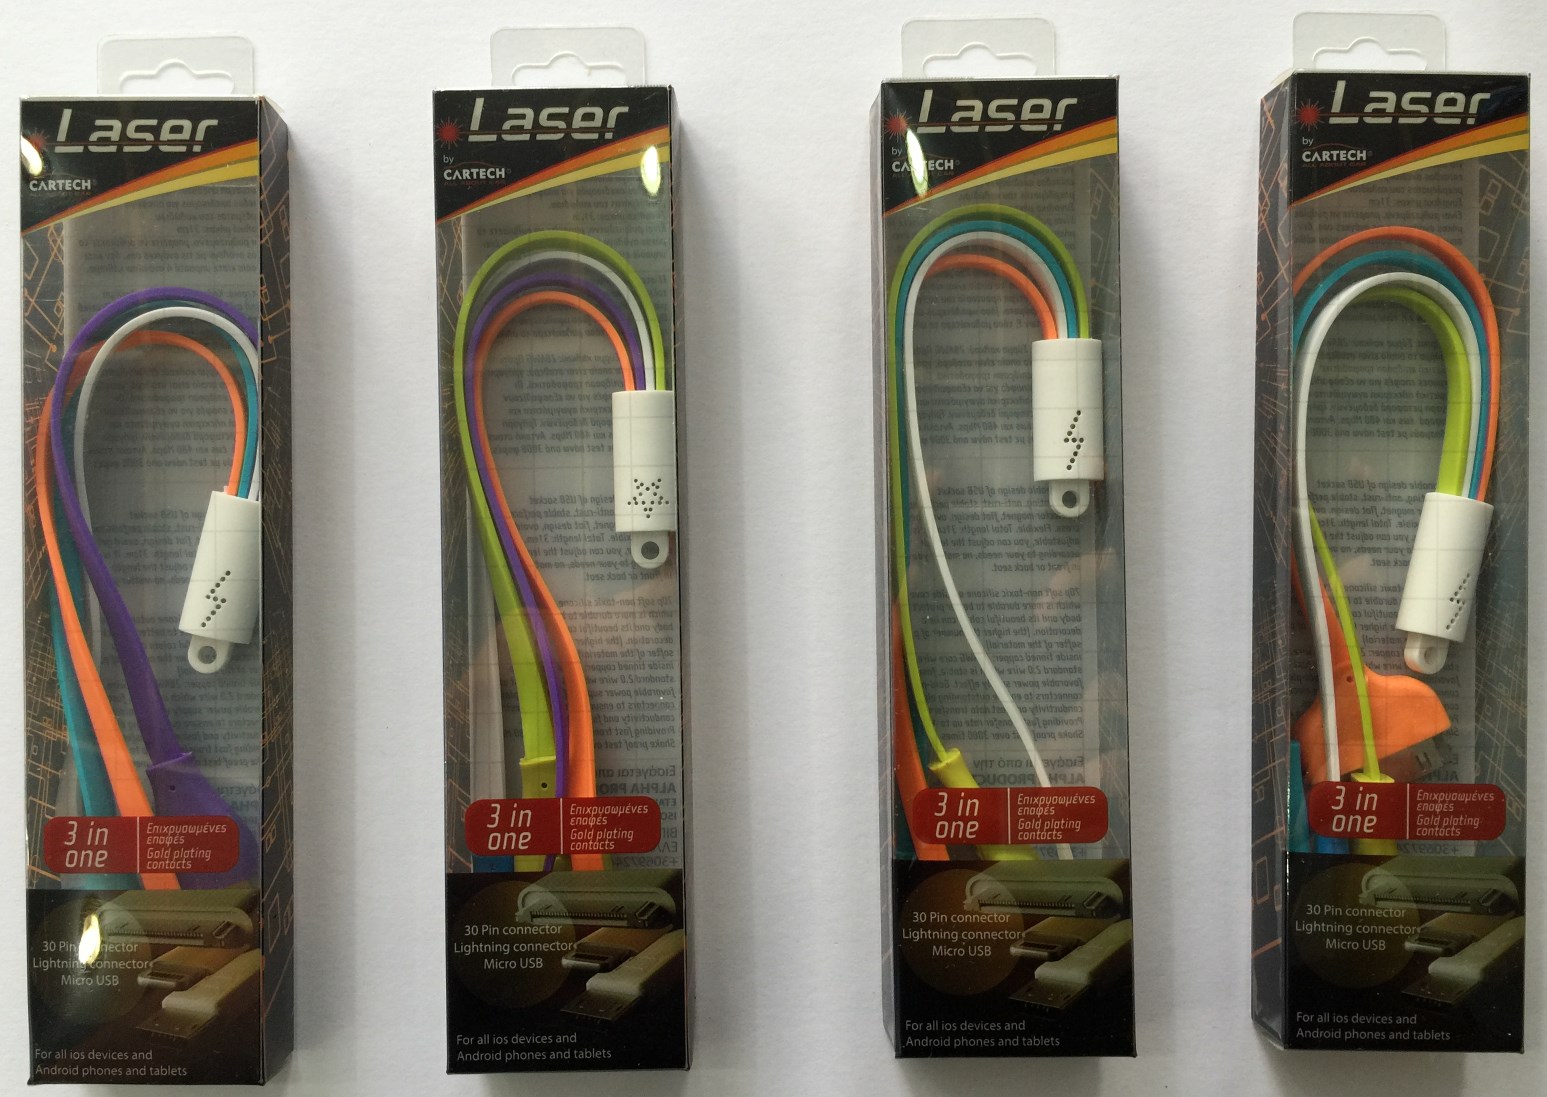 3 in 1 30 pin/Lightning/Micro USB Καλώδιο Laser Τιμή : ευρώ